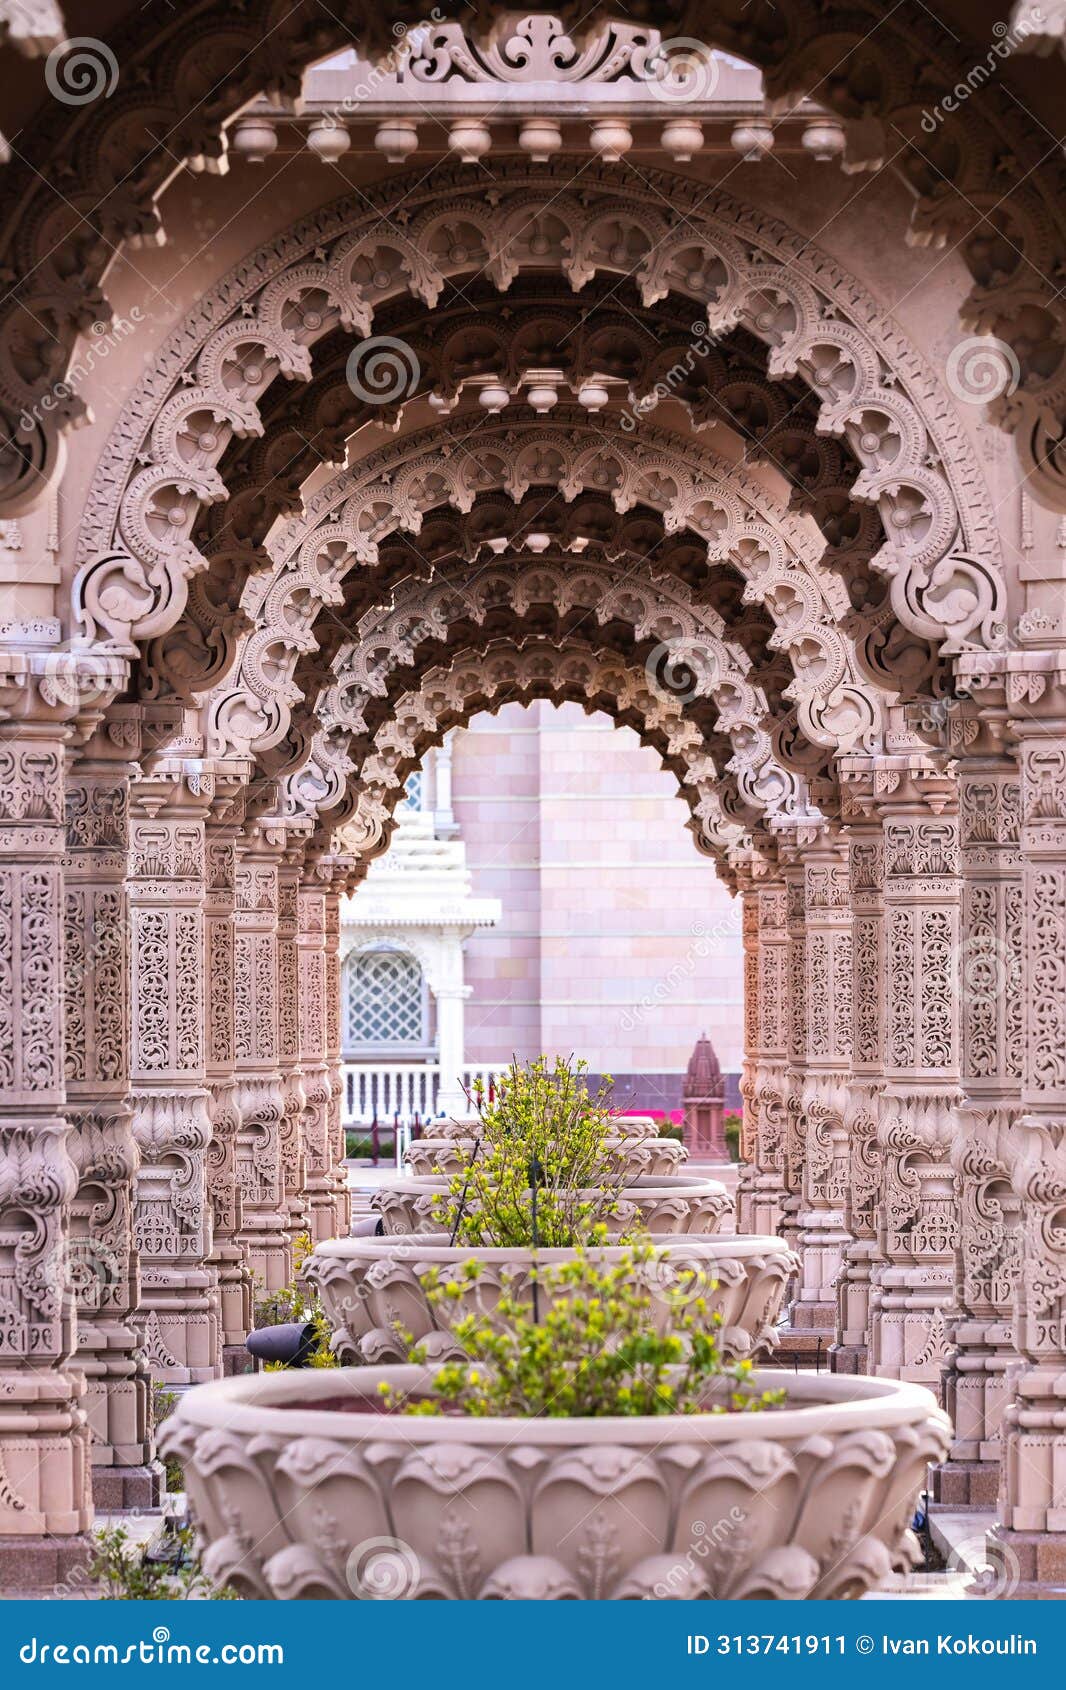 beautiful decorated arch at baps swaminarayan akshardham temple